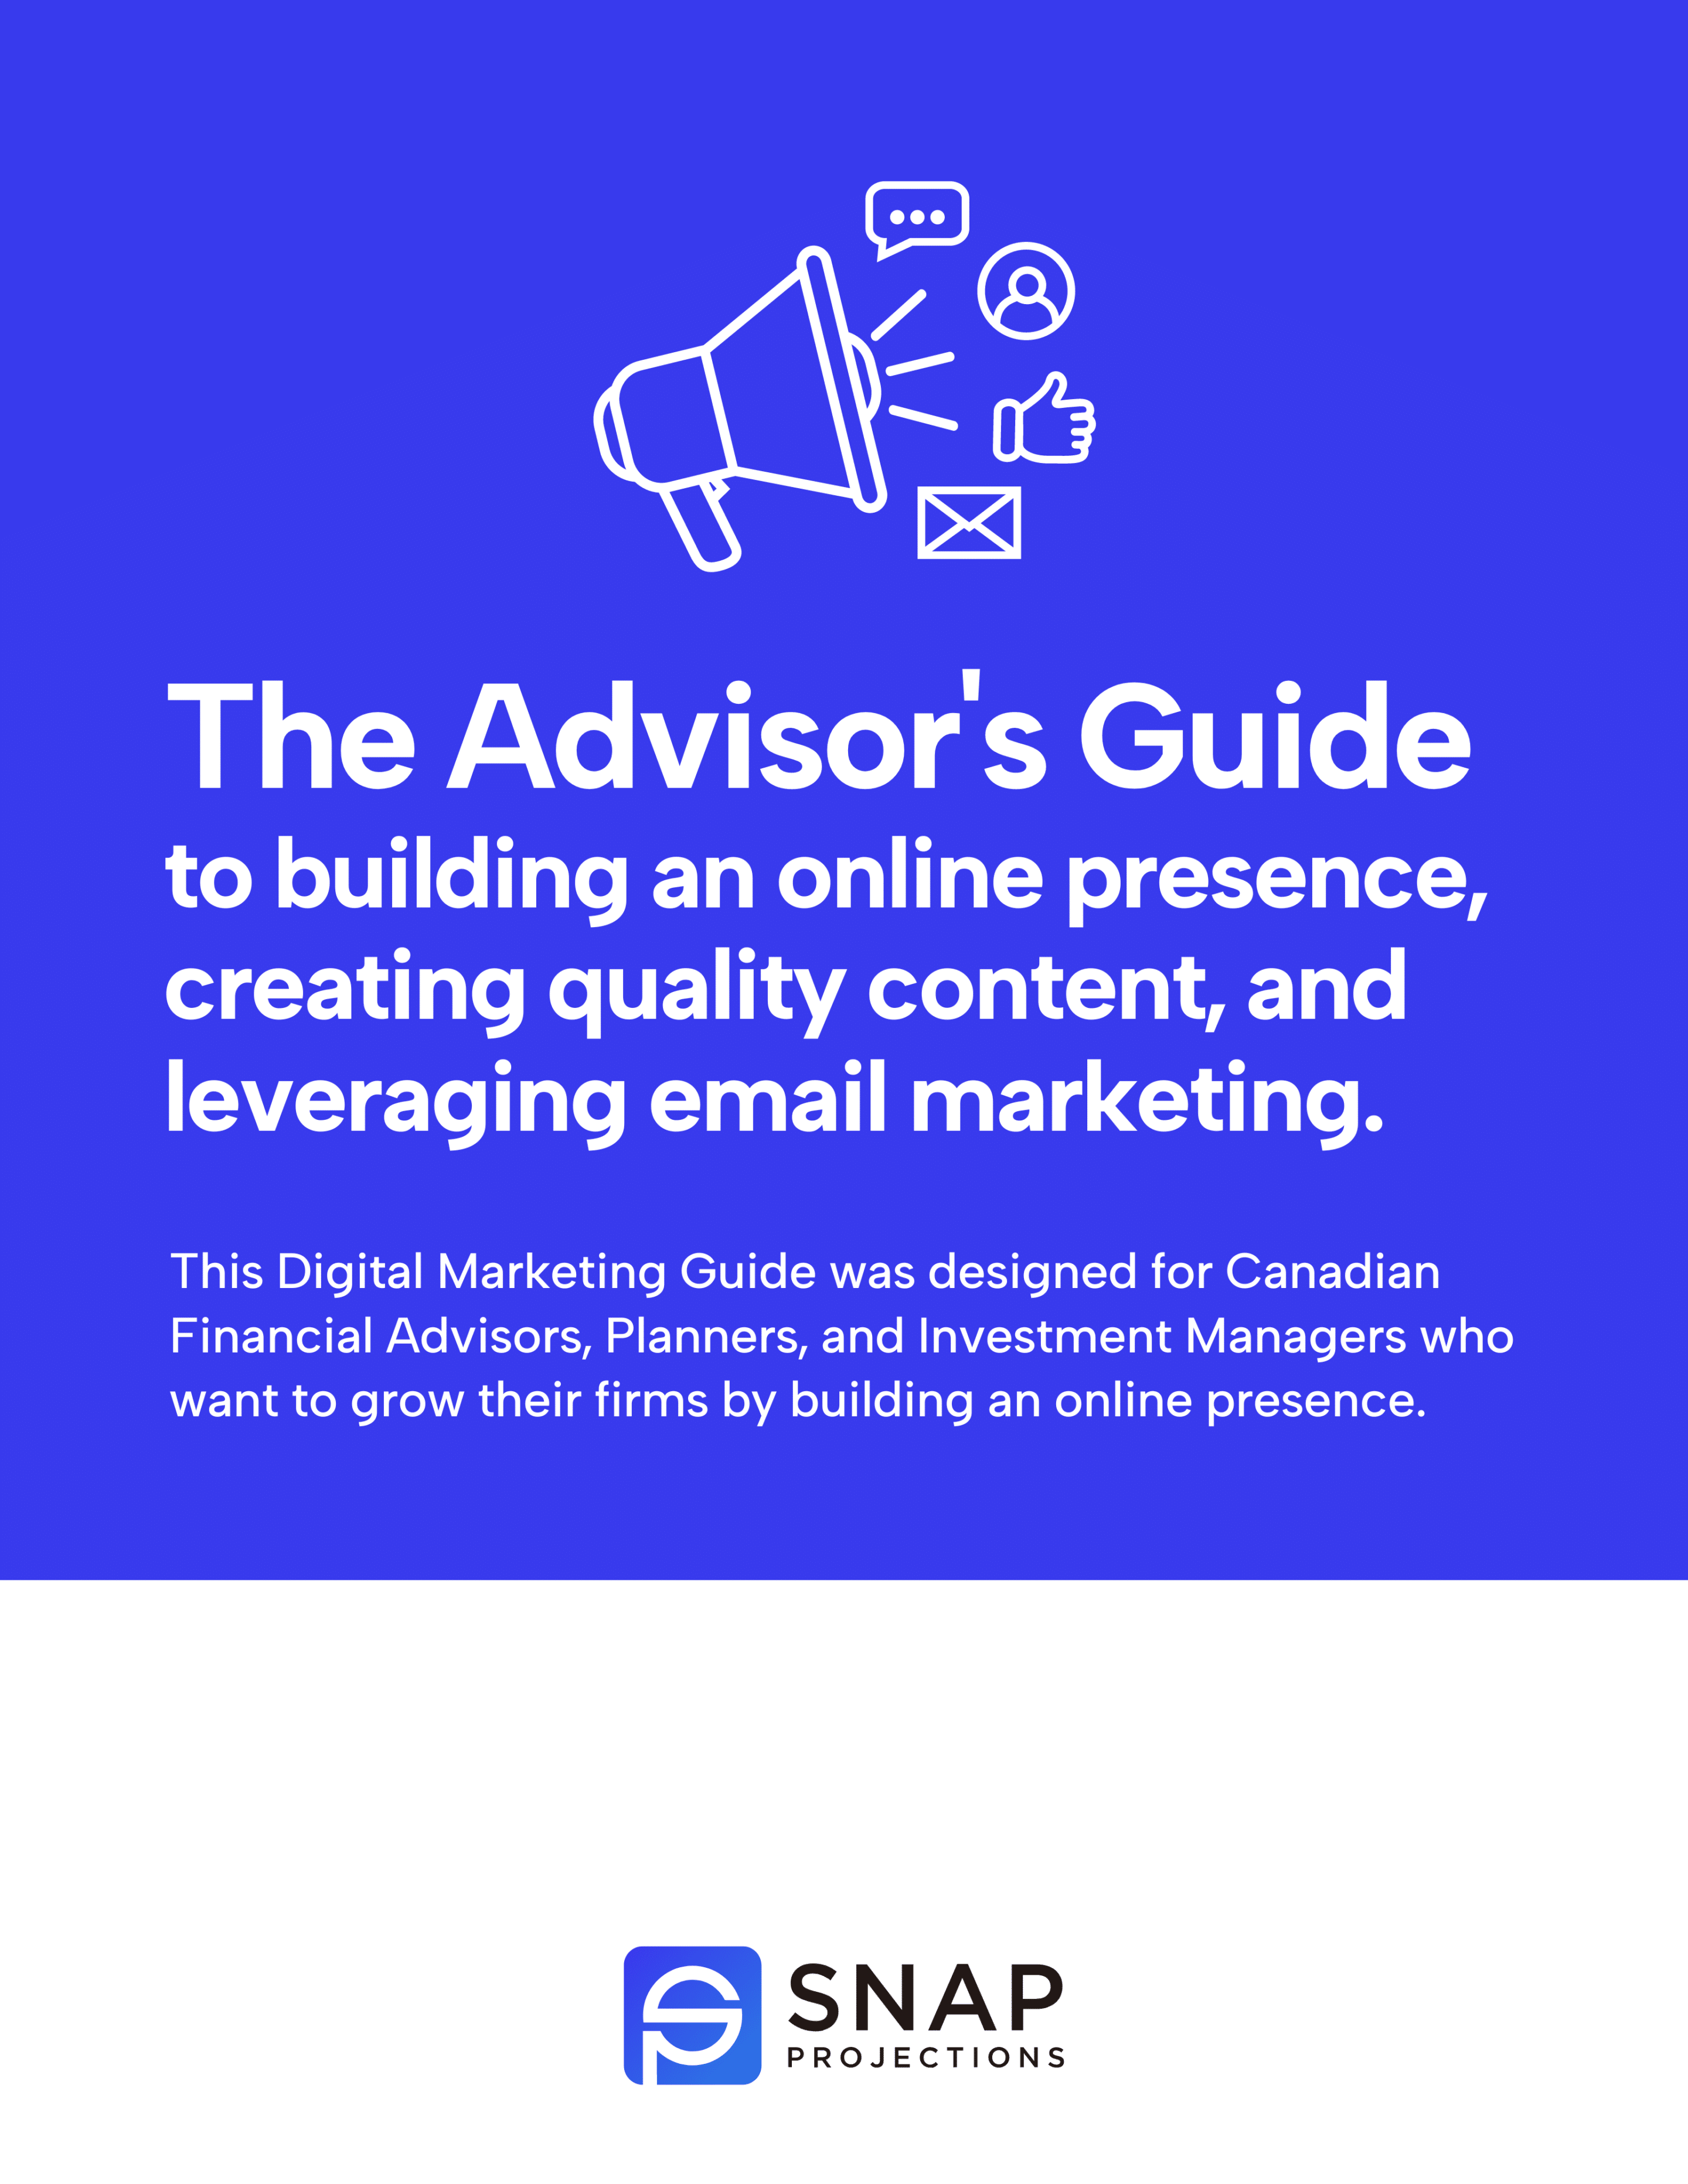 The Financial Advisor's Marketing Guide